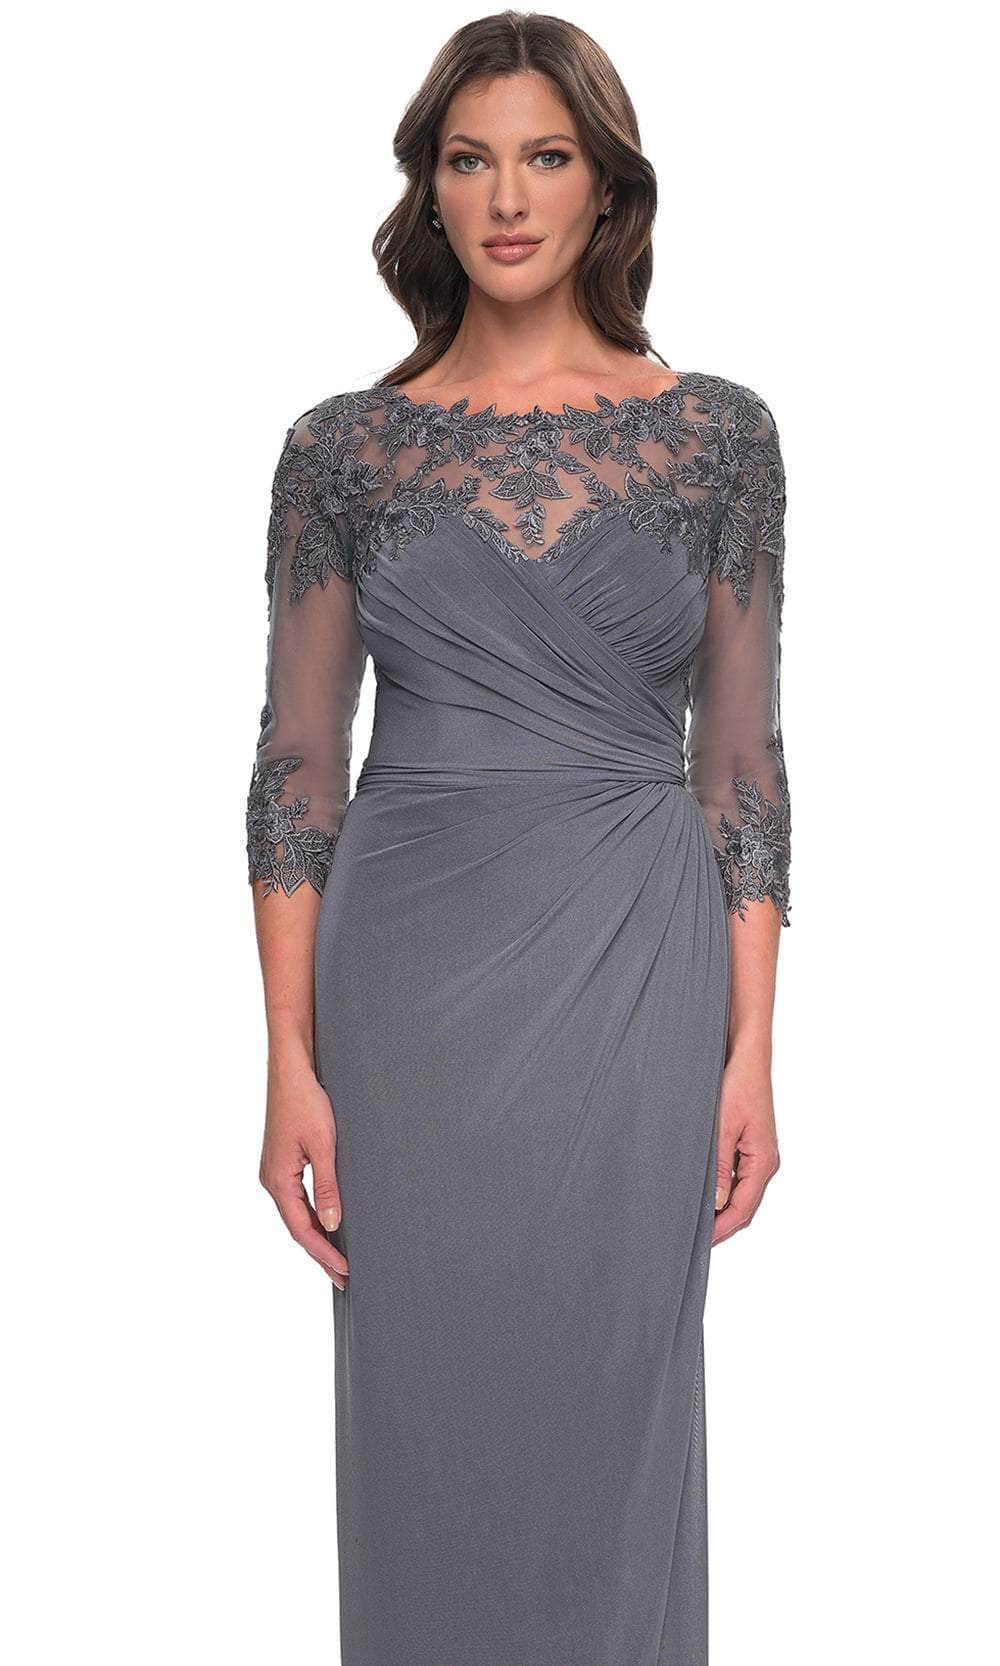 La Femme 31093 - Lace Ornate Sheath Evening Dress Evening Dresses